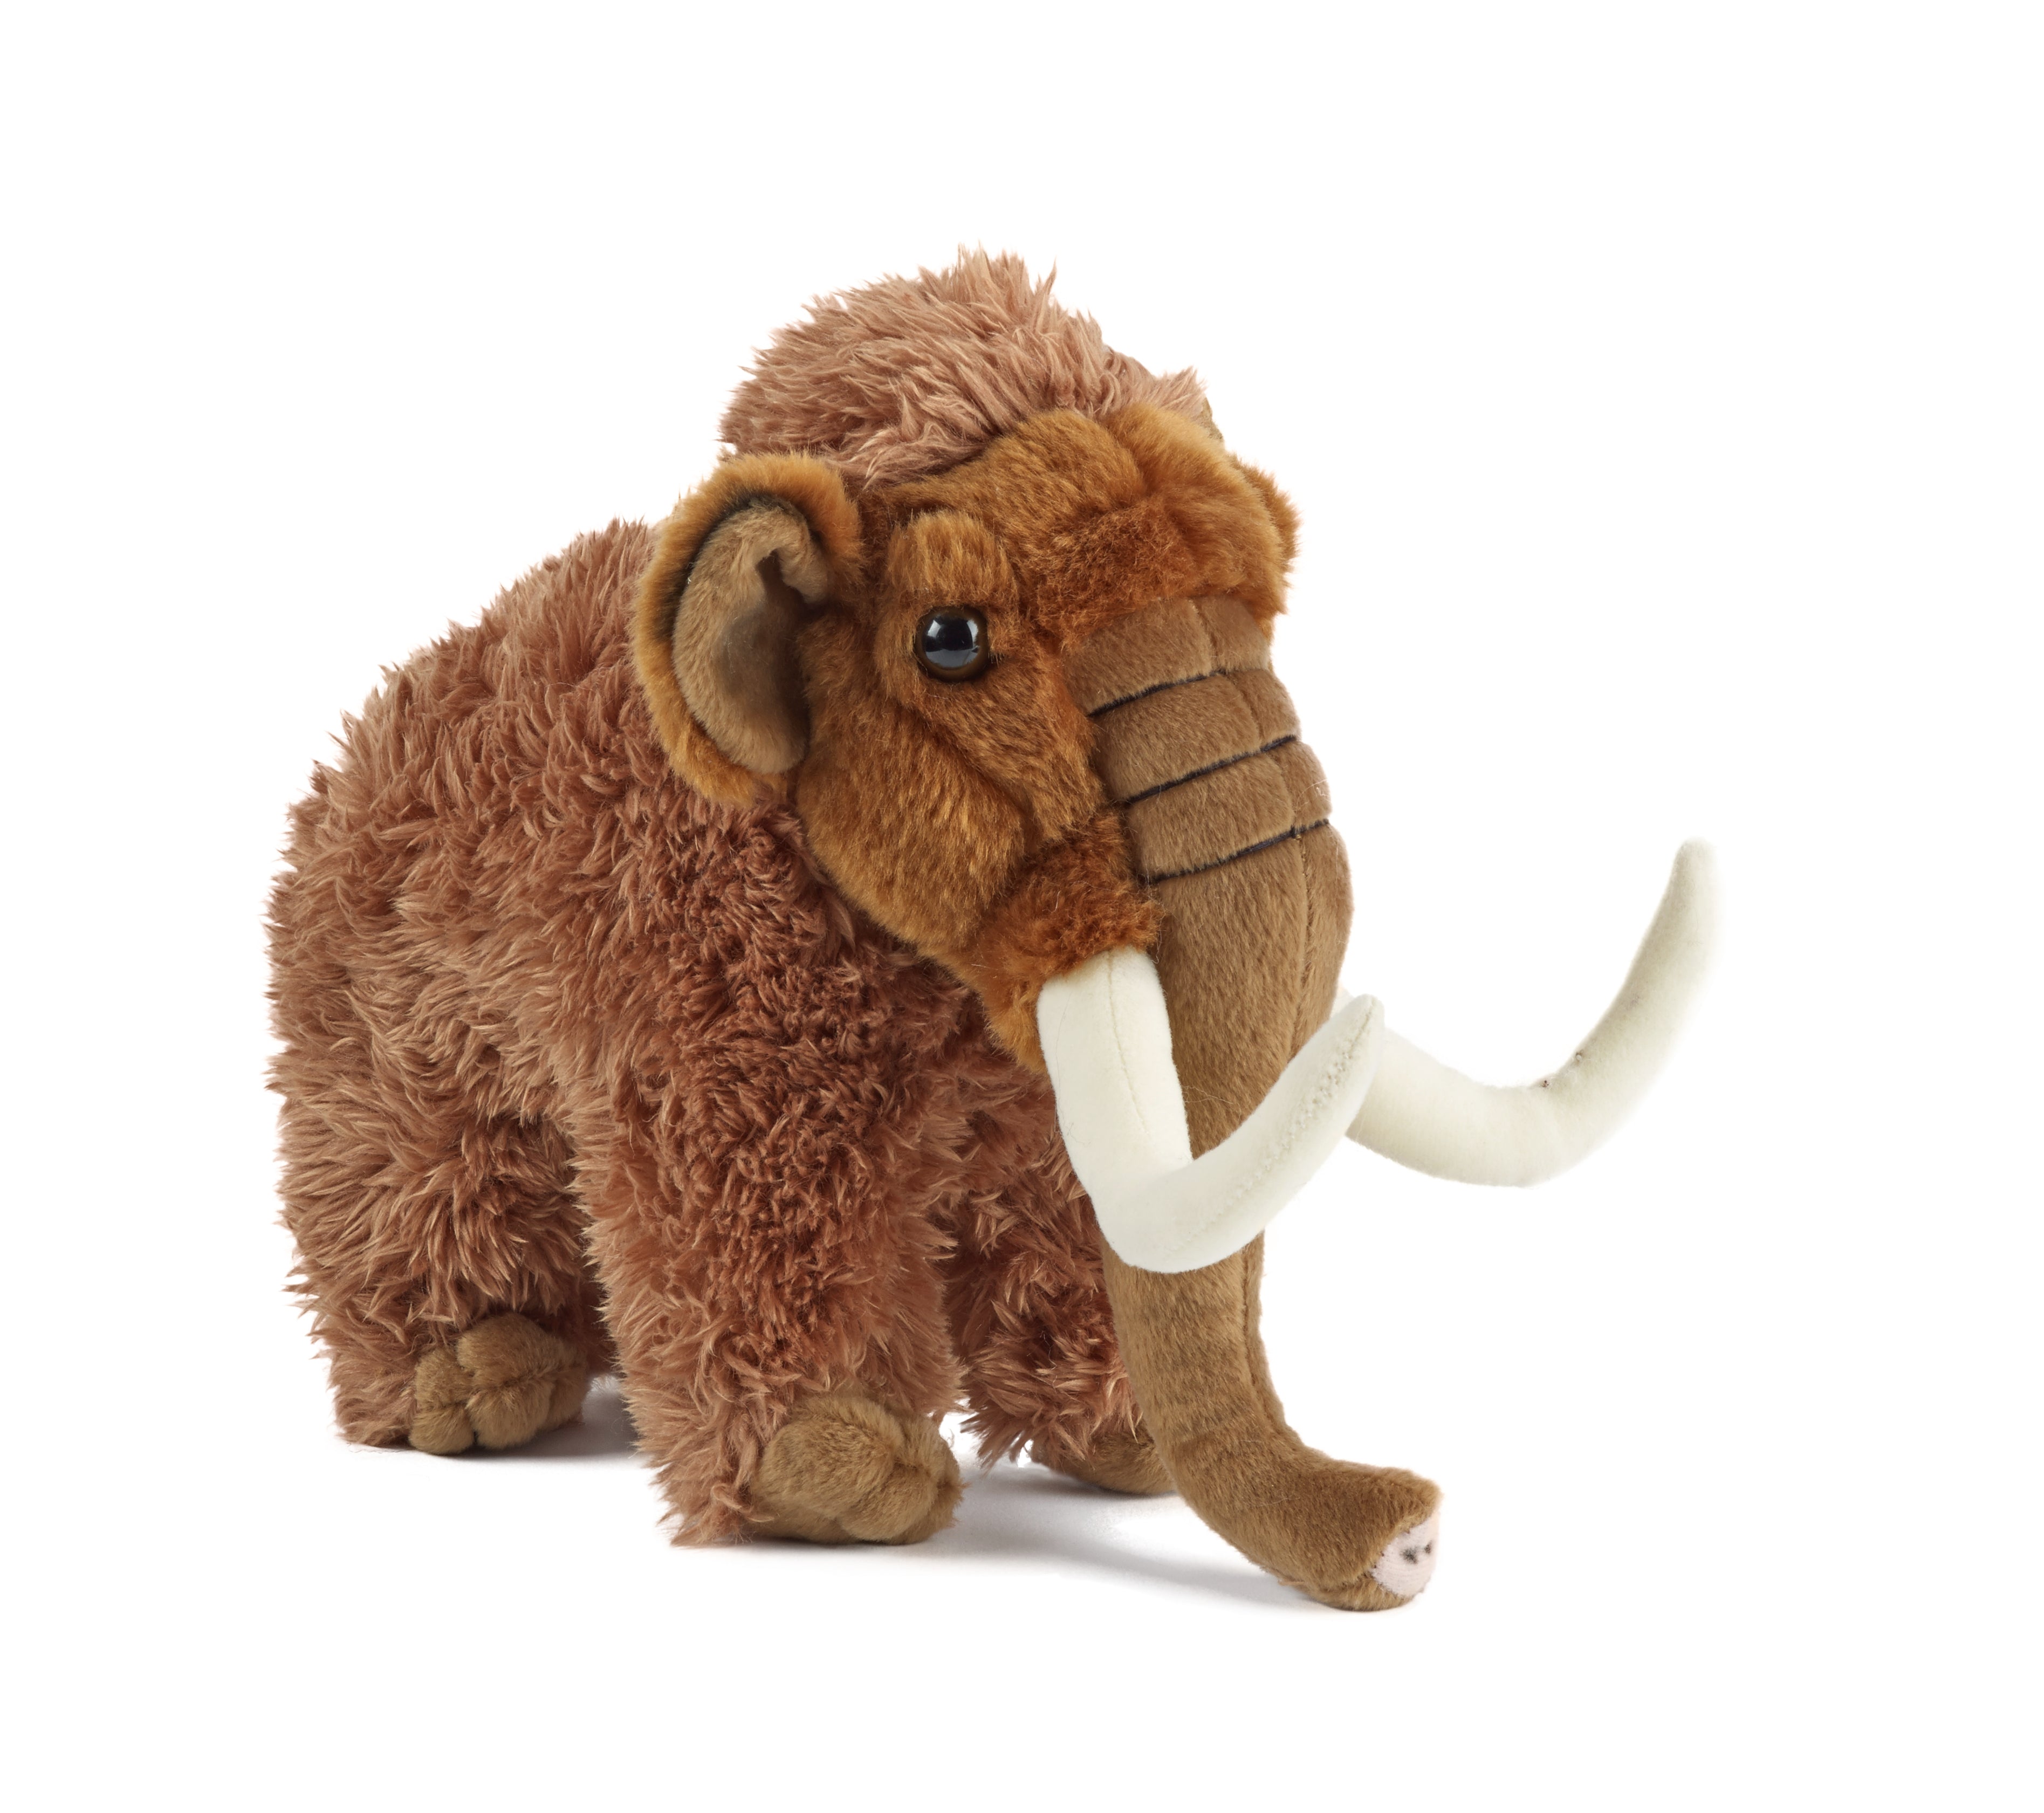 wooly mammoth stuffed animal